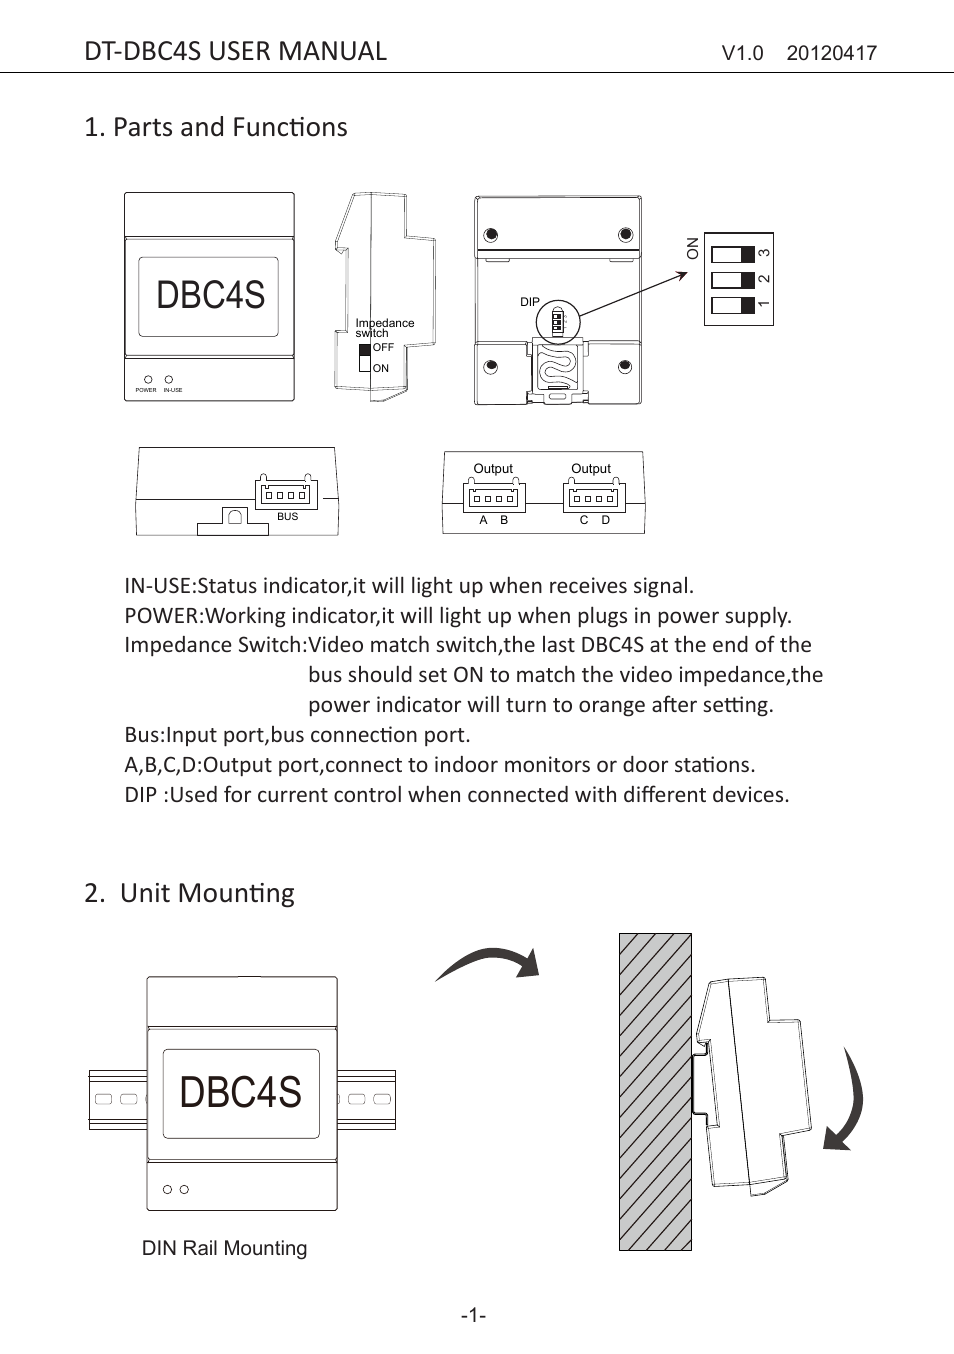 DT-DBC4S Manual